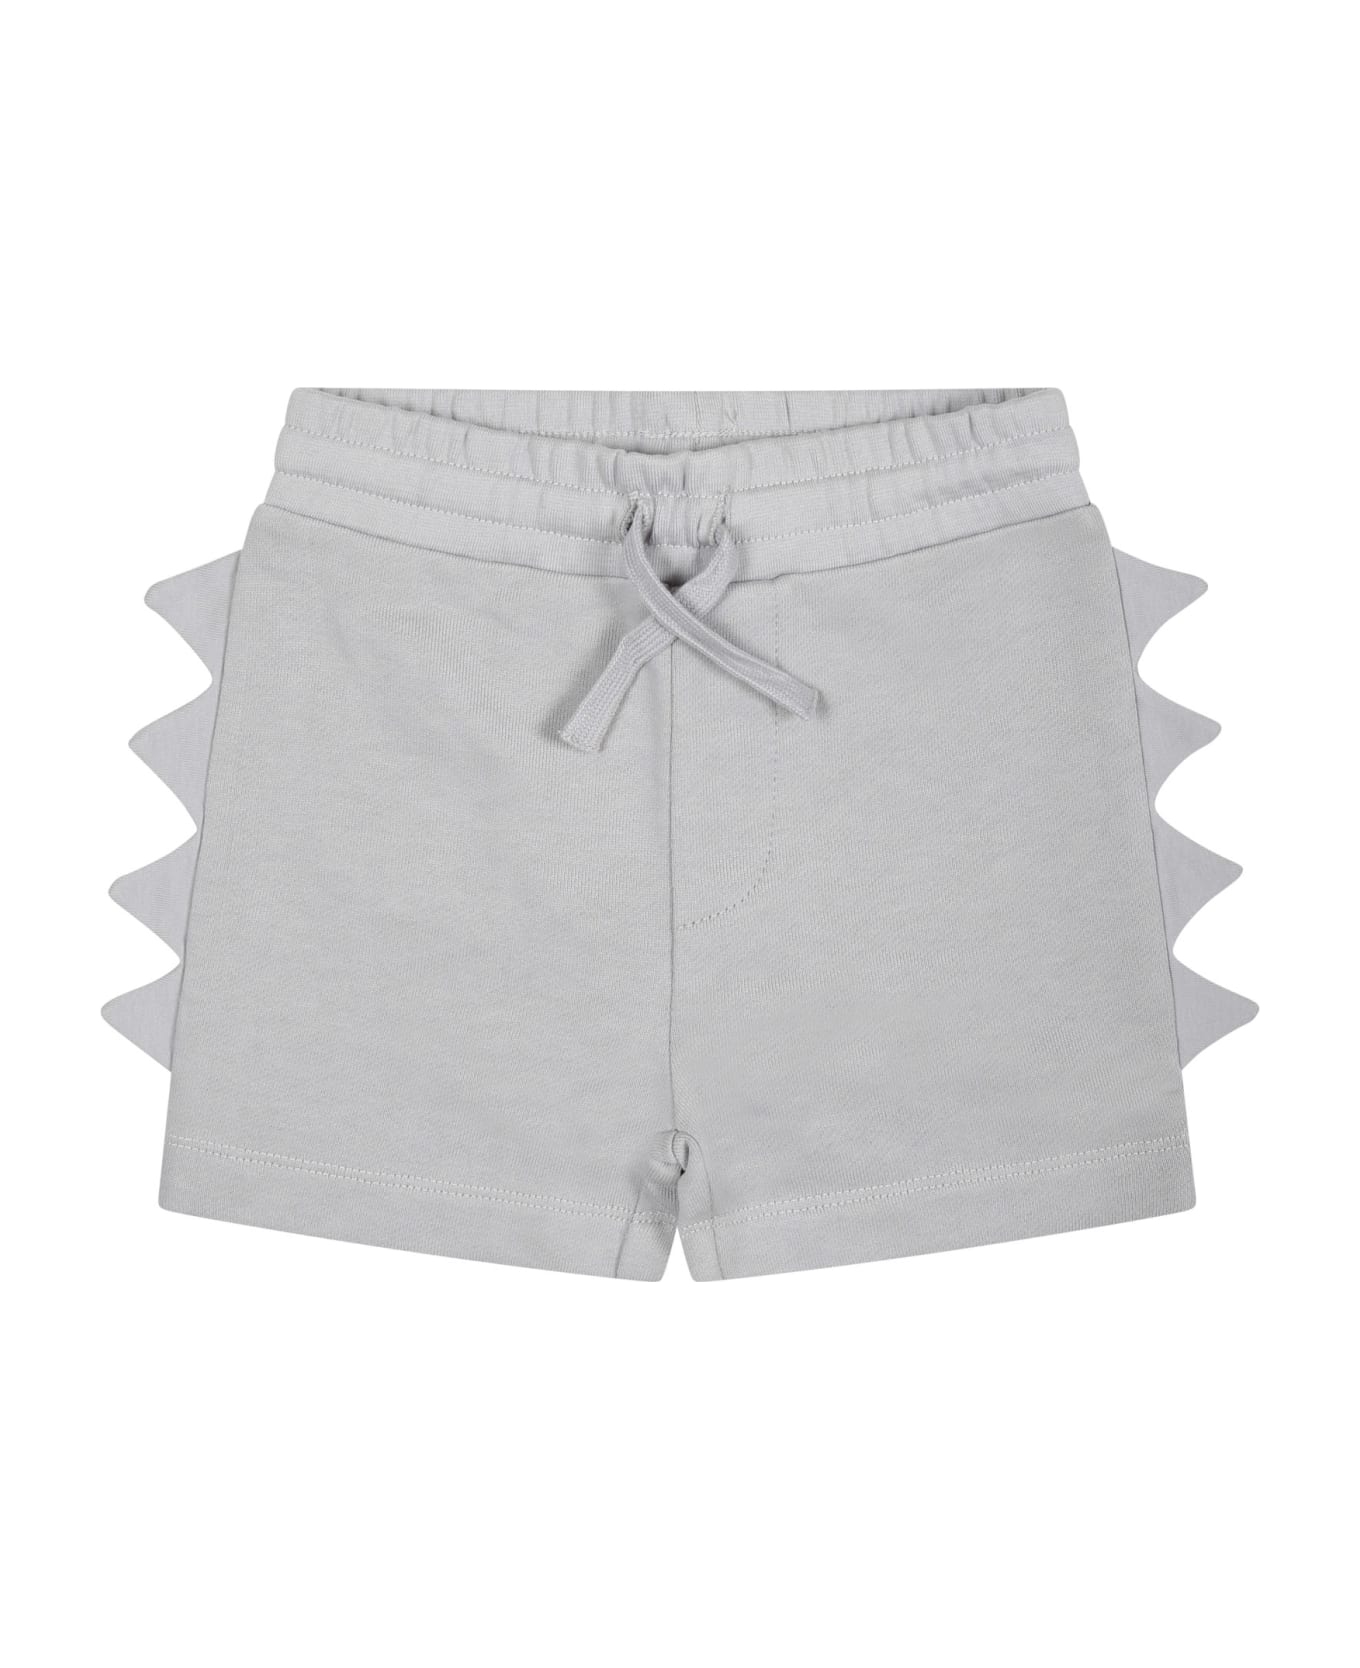 Stella McCartney Kids Gray Shorts For Babies - Grey